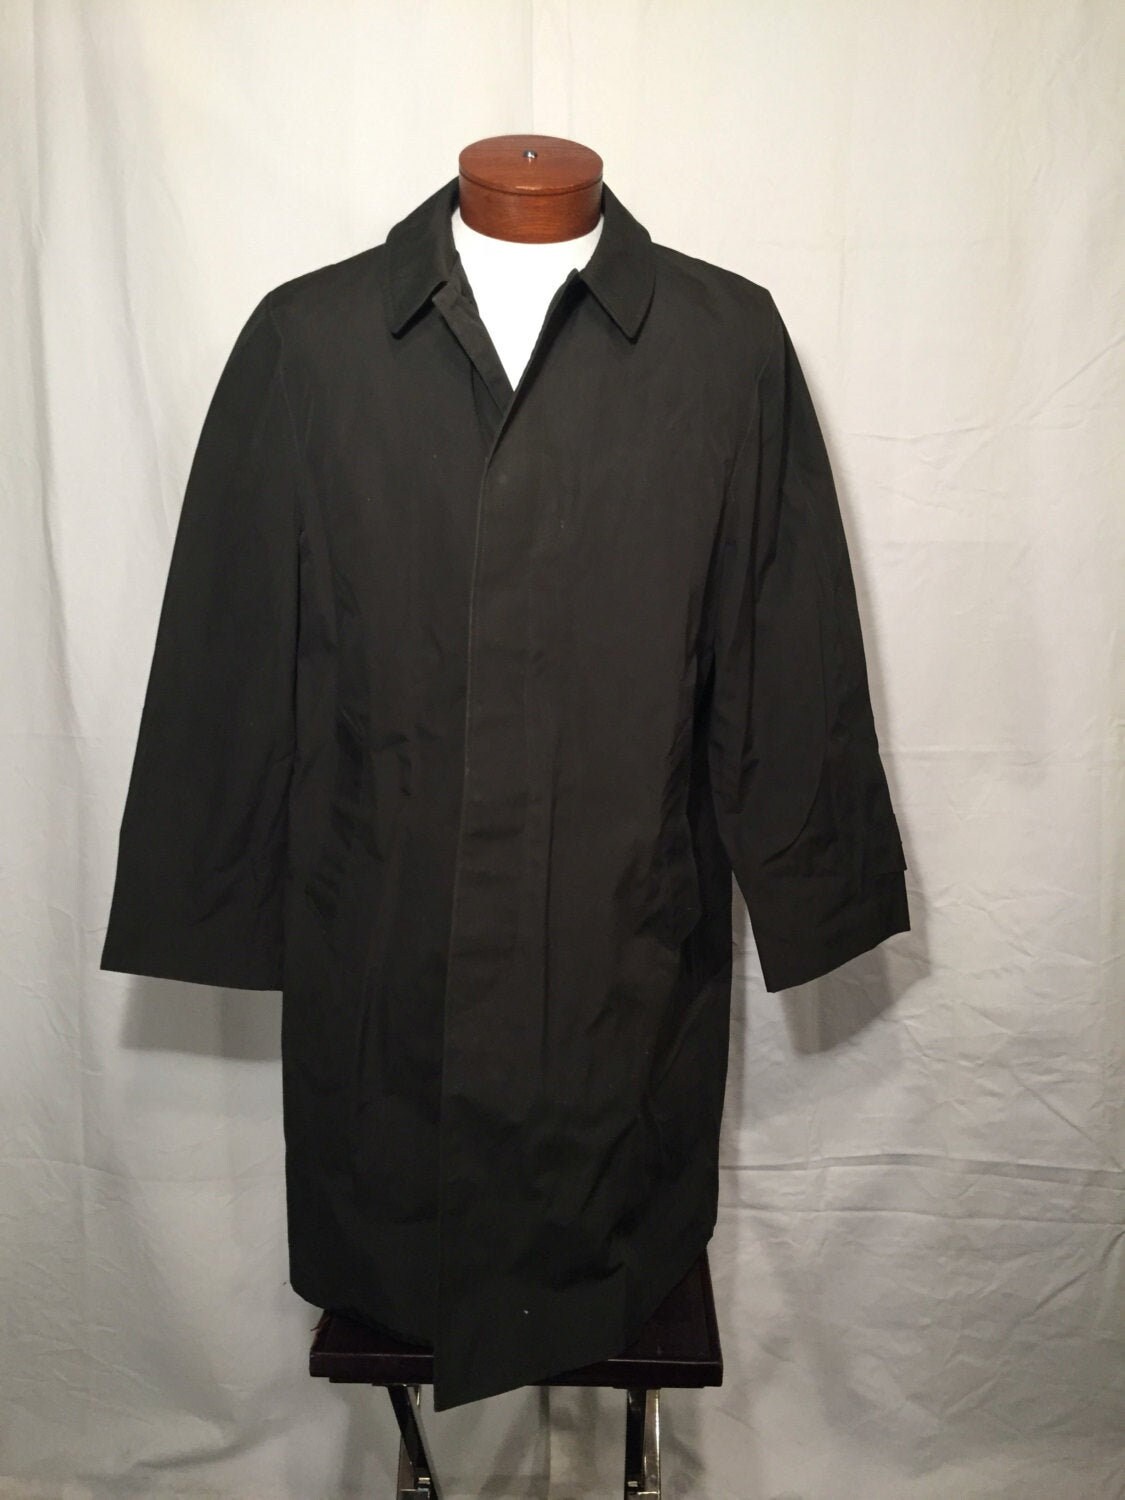 Dark Olive Green Overcoat Large L Vintage Rain Coat Car Coat | Etsy